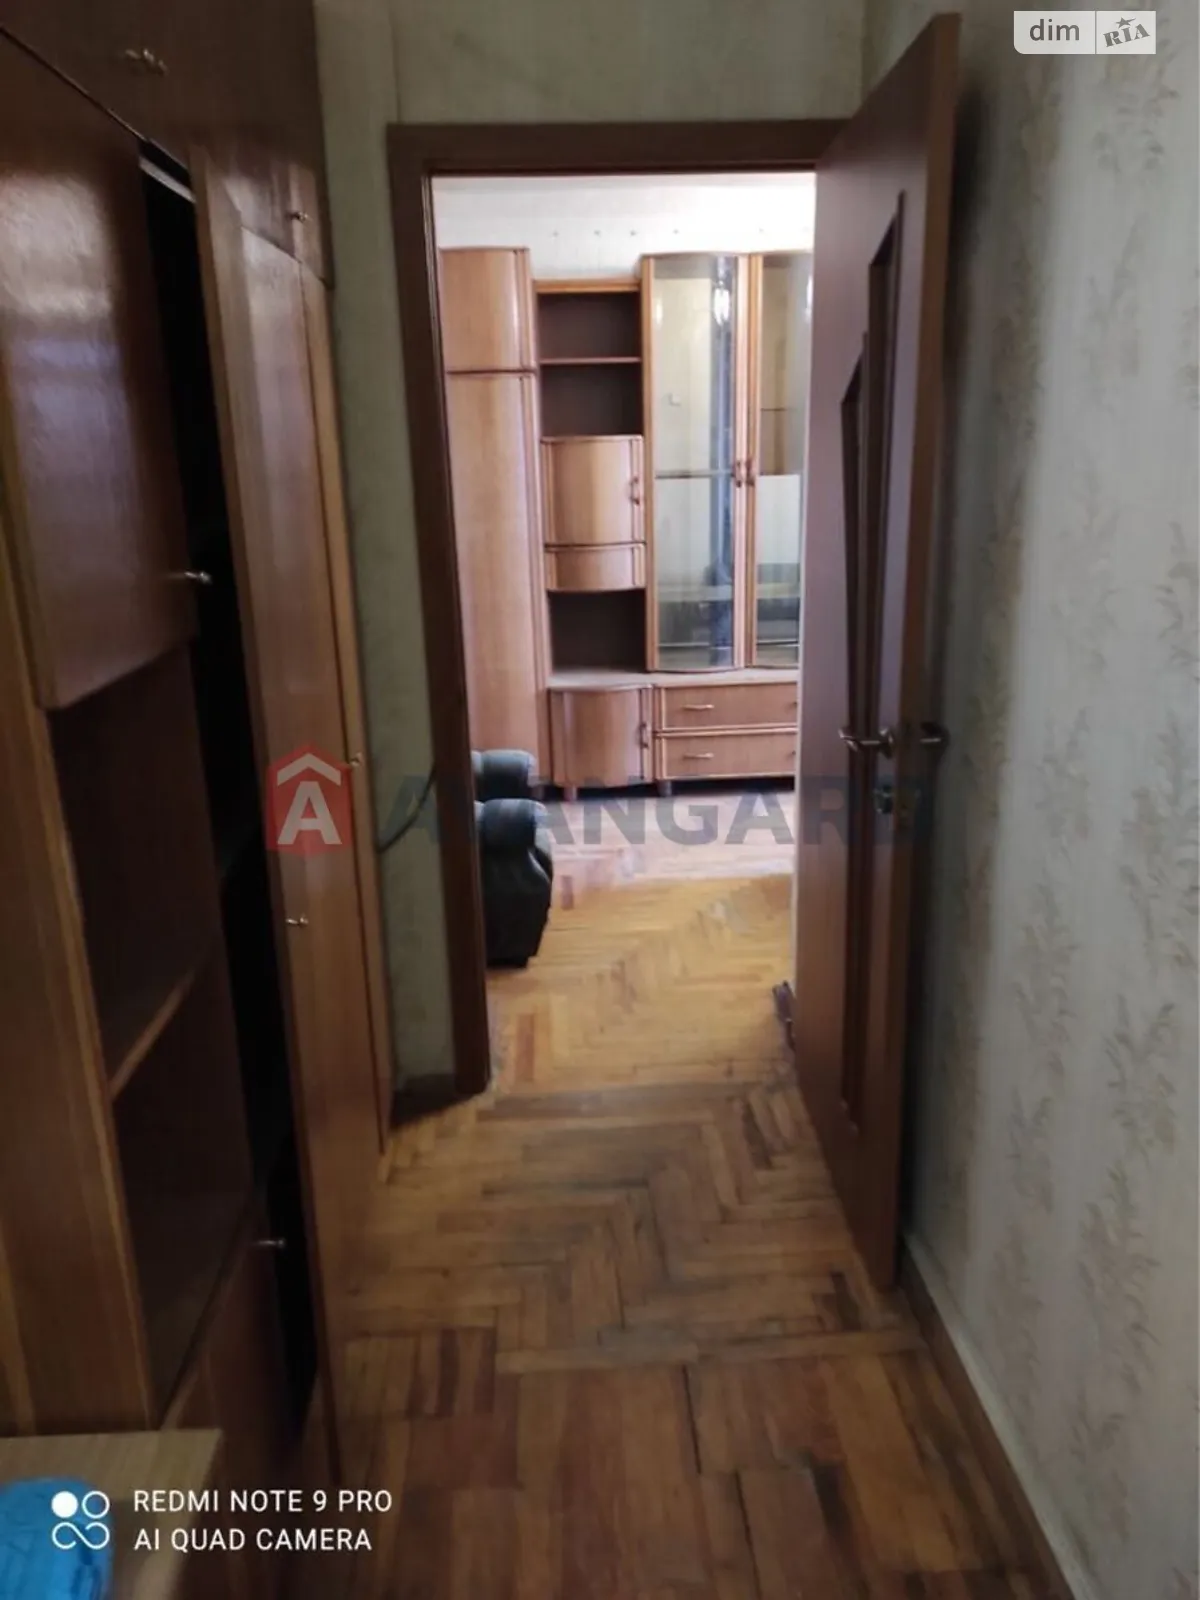 2-комнатная квартира 46 кв. м в Запорожье, ул. Тбилисская, 29 - фото 1